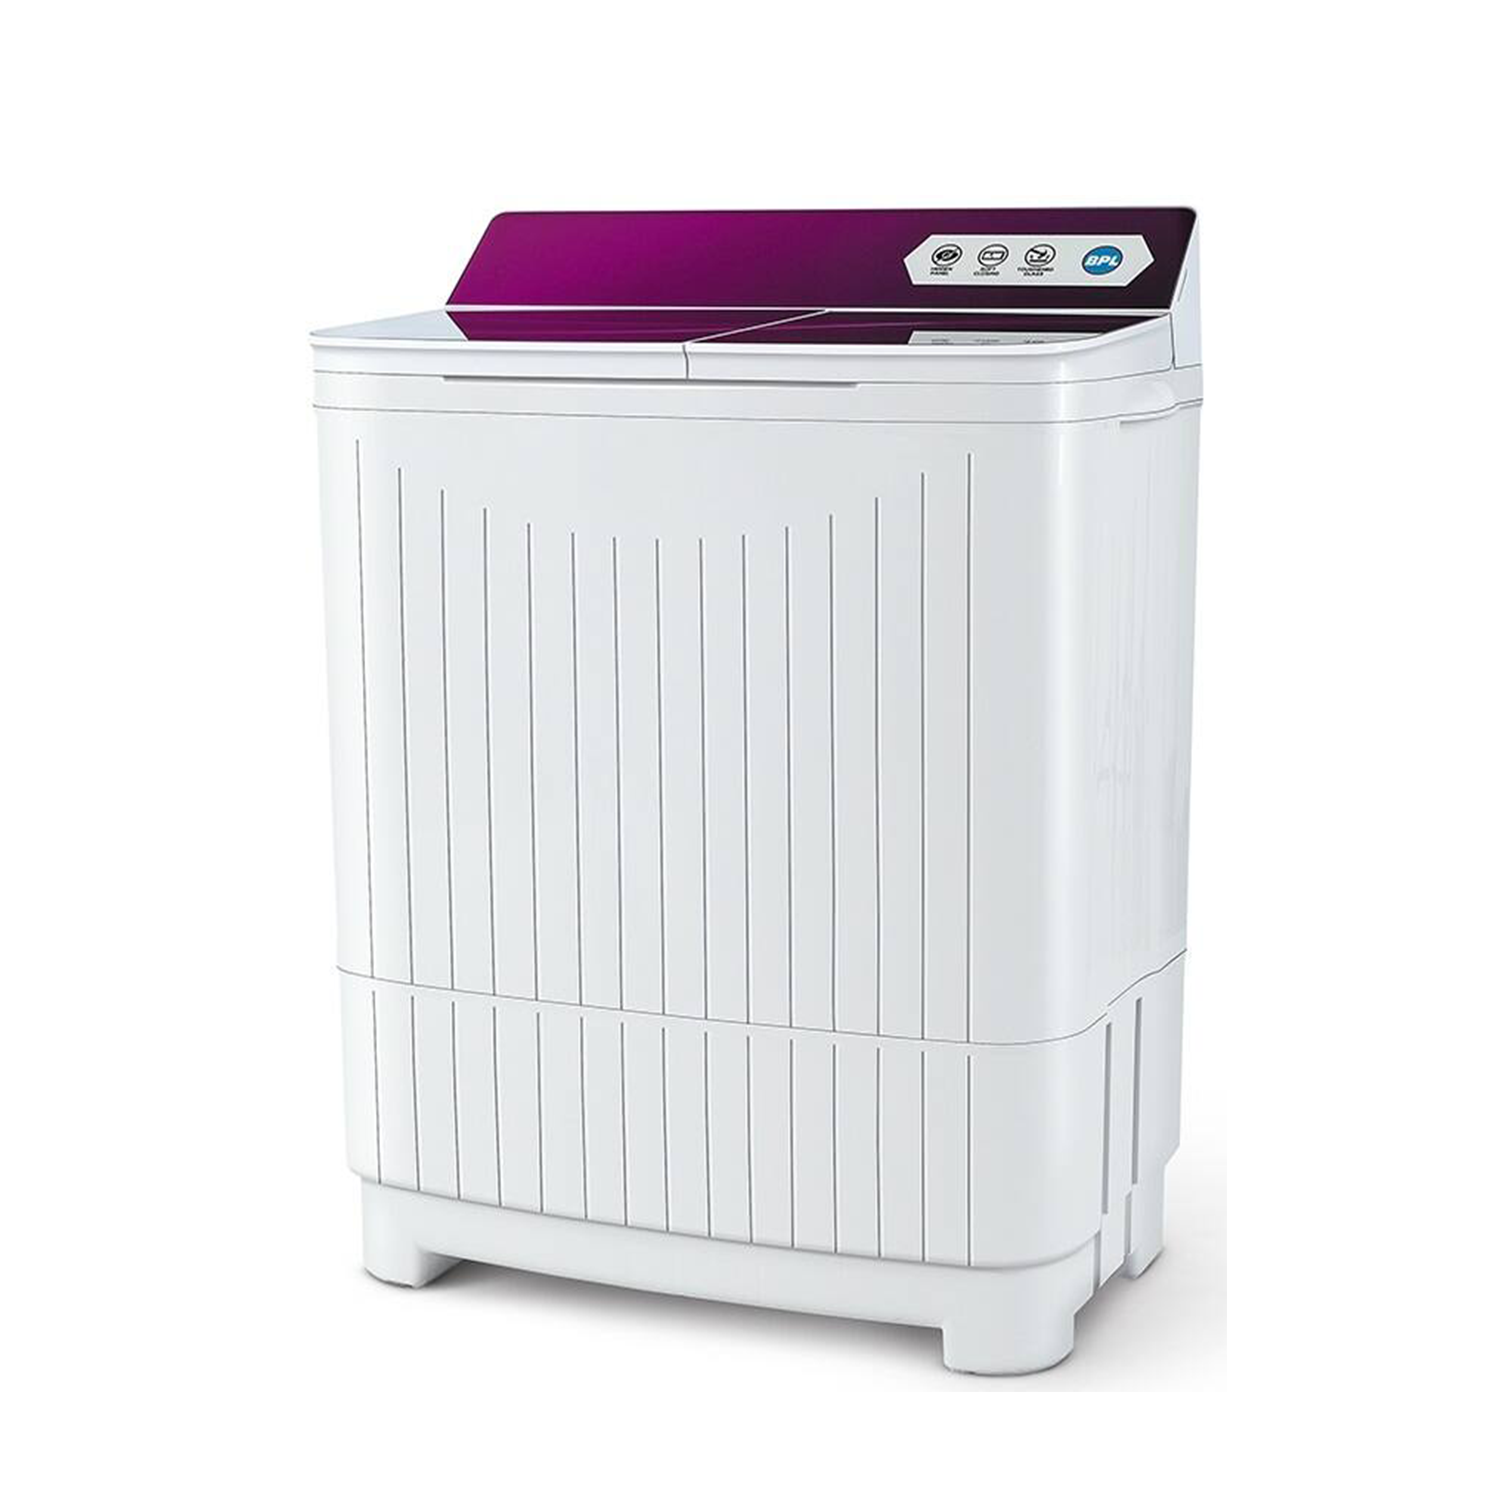 BPL 8 Kg Semi-Automatic Washing Machine with Dual Waterfall and Jumbo Pulsator, BSW-8000PXPP (Purple)